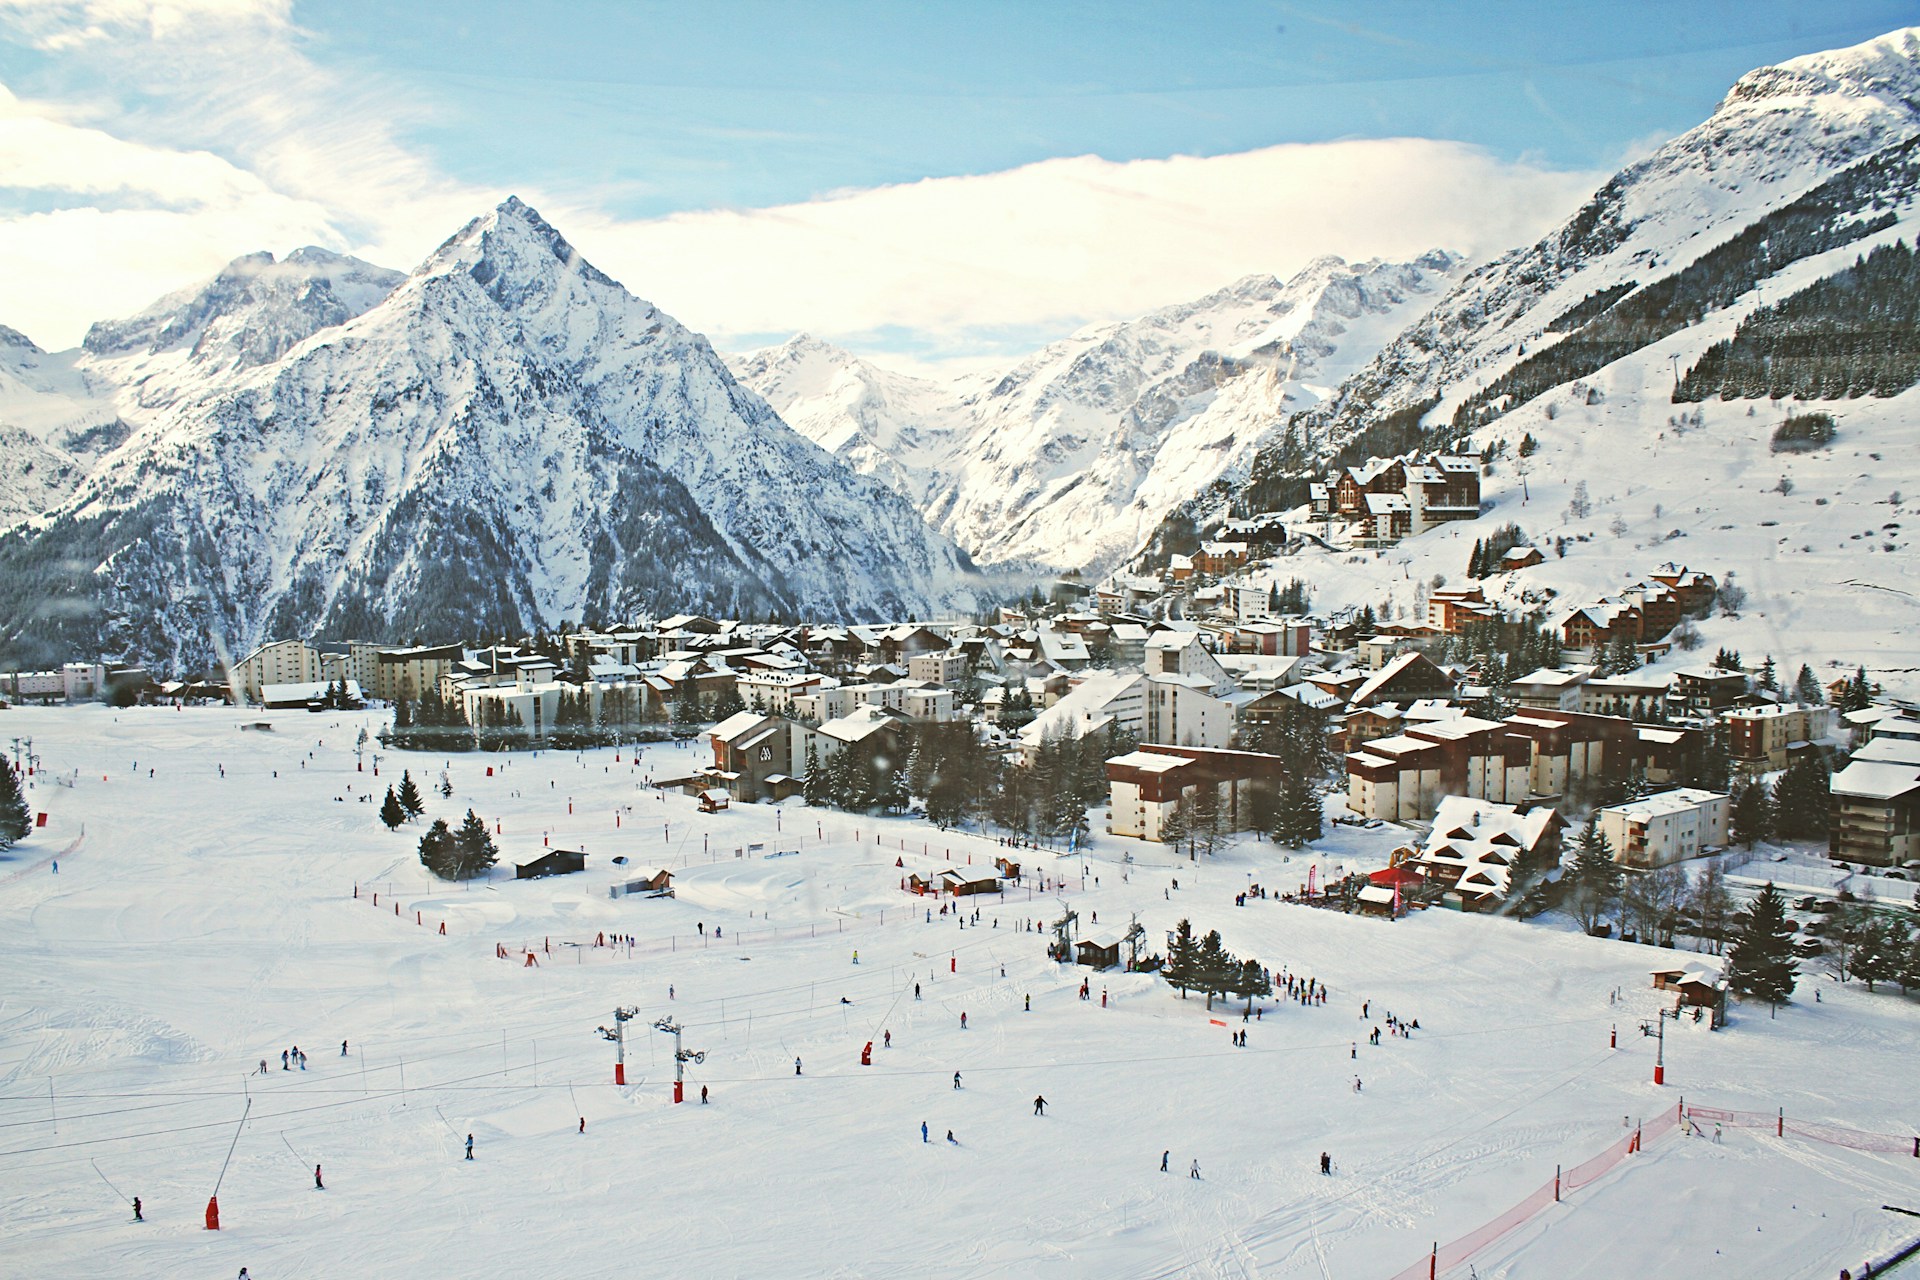 Les Deux Alpes village covered in snow